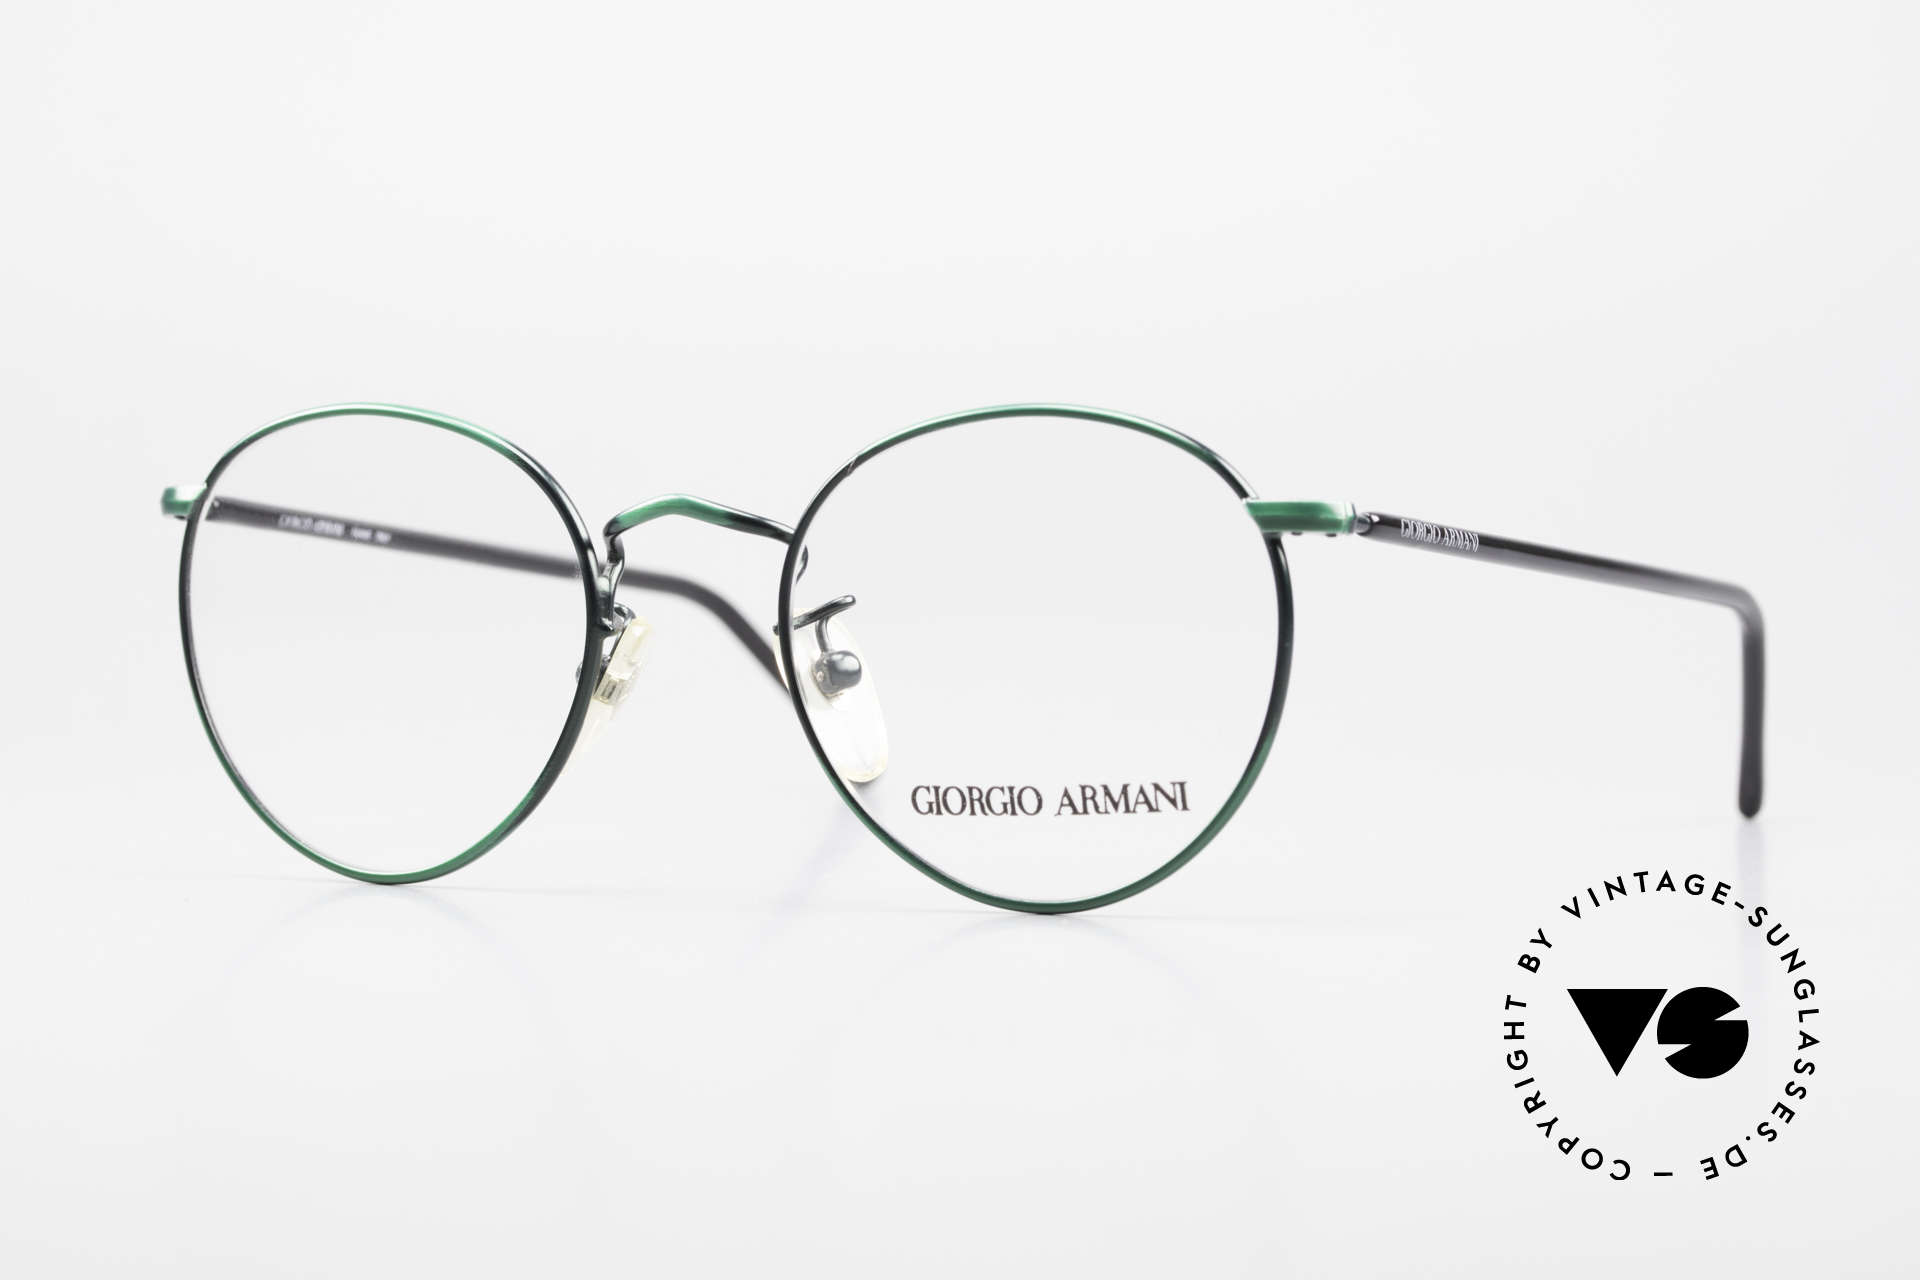 Giorgio Armani 138 Panto Frame Ladies And Gents, unisex vintage Giorgio Armani designer eyeglasses, Made for Men and Women